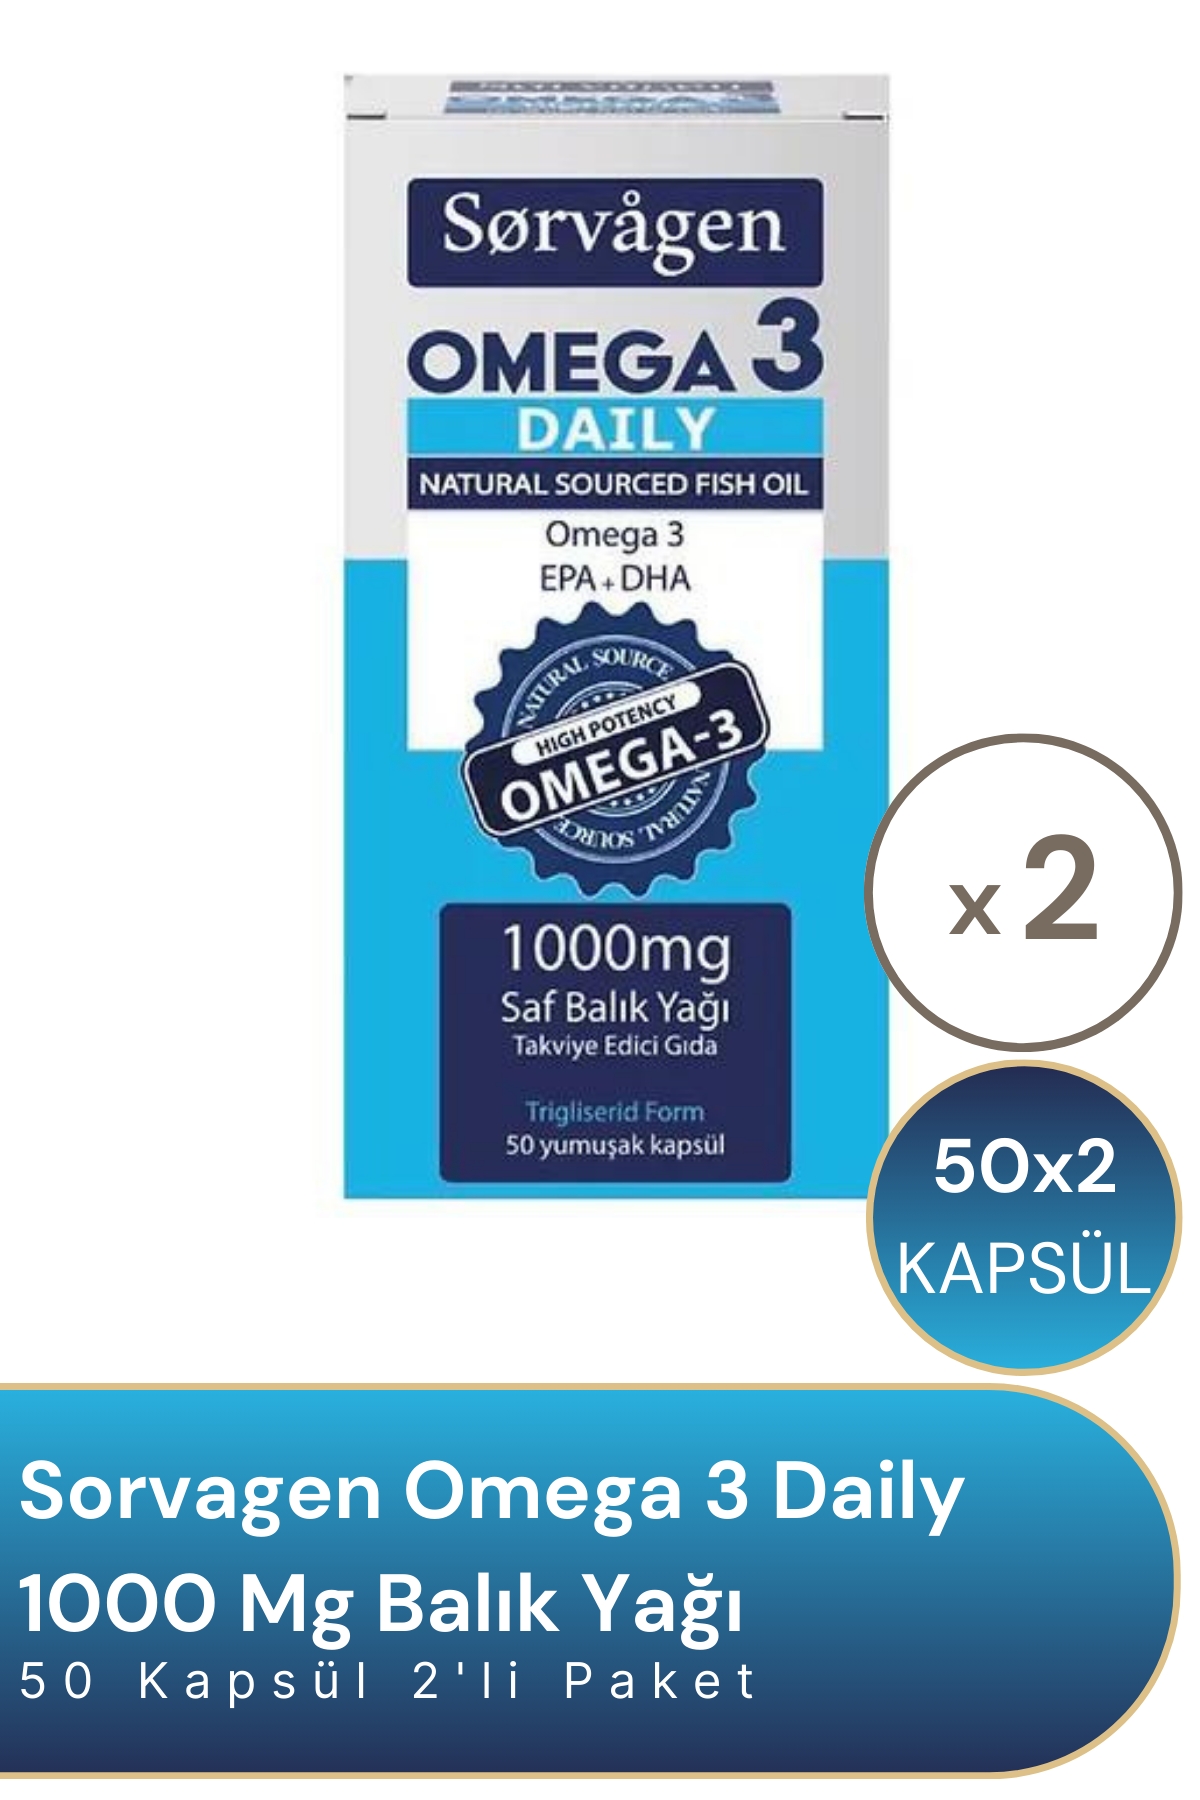 Sorvagen Omega 3 Daily 1000 Mg Balık Yağı 50 Kapsül 2'li Paket